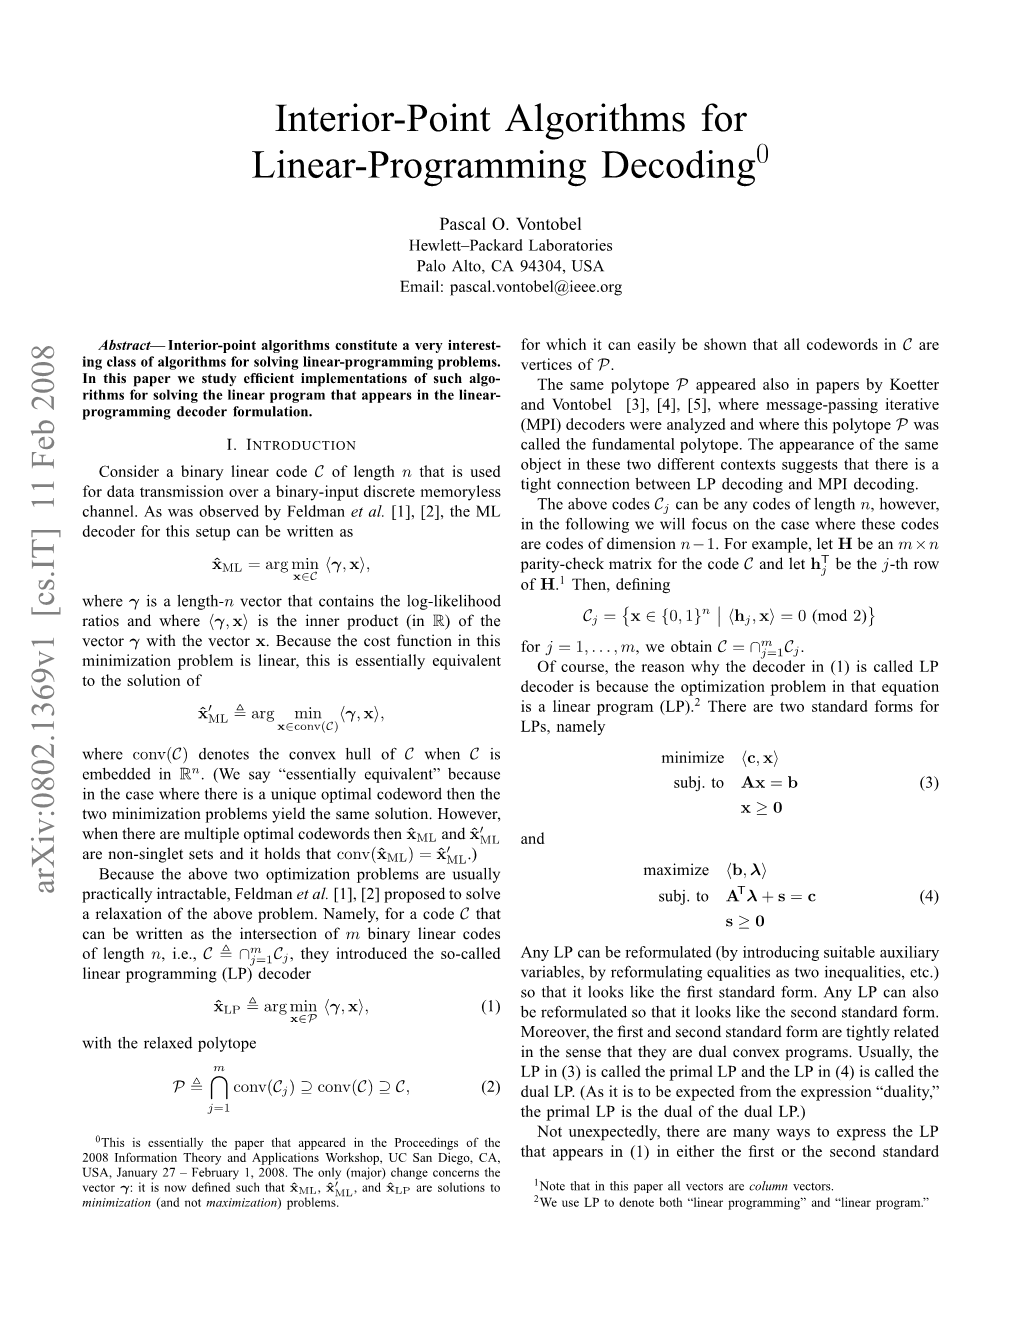 Interior-Point Algorithms for Linear-Programming Decoding